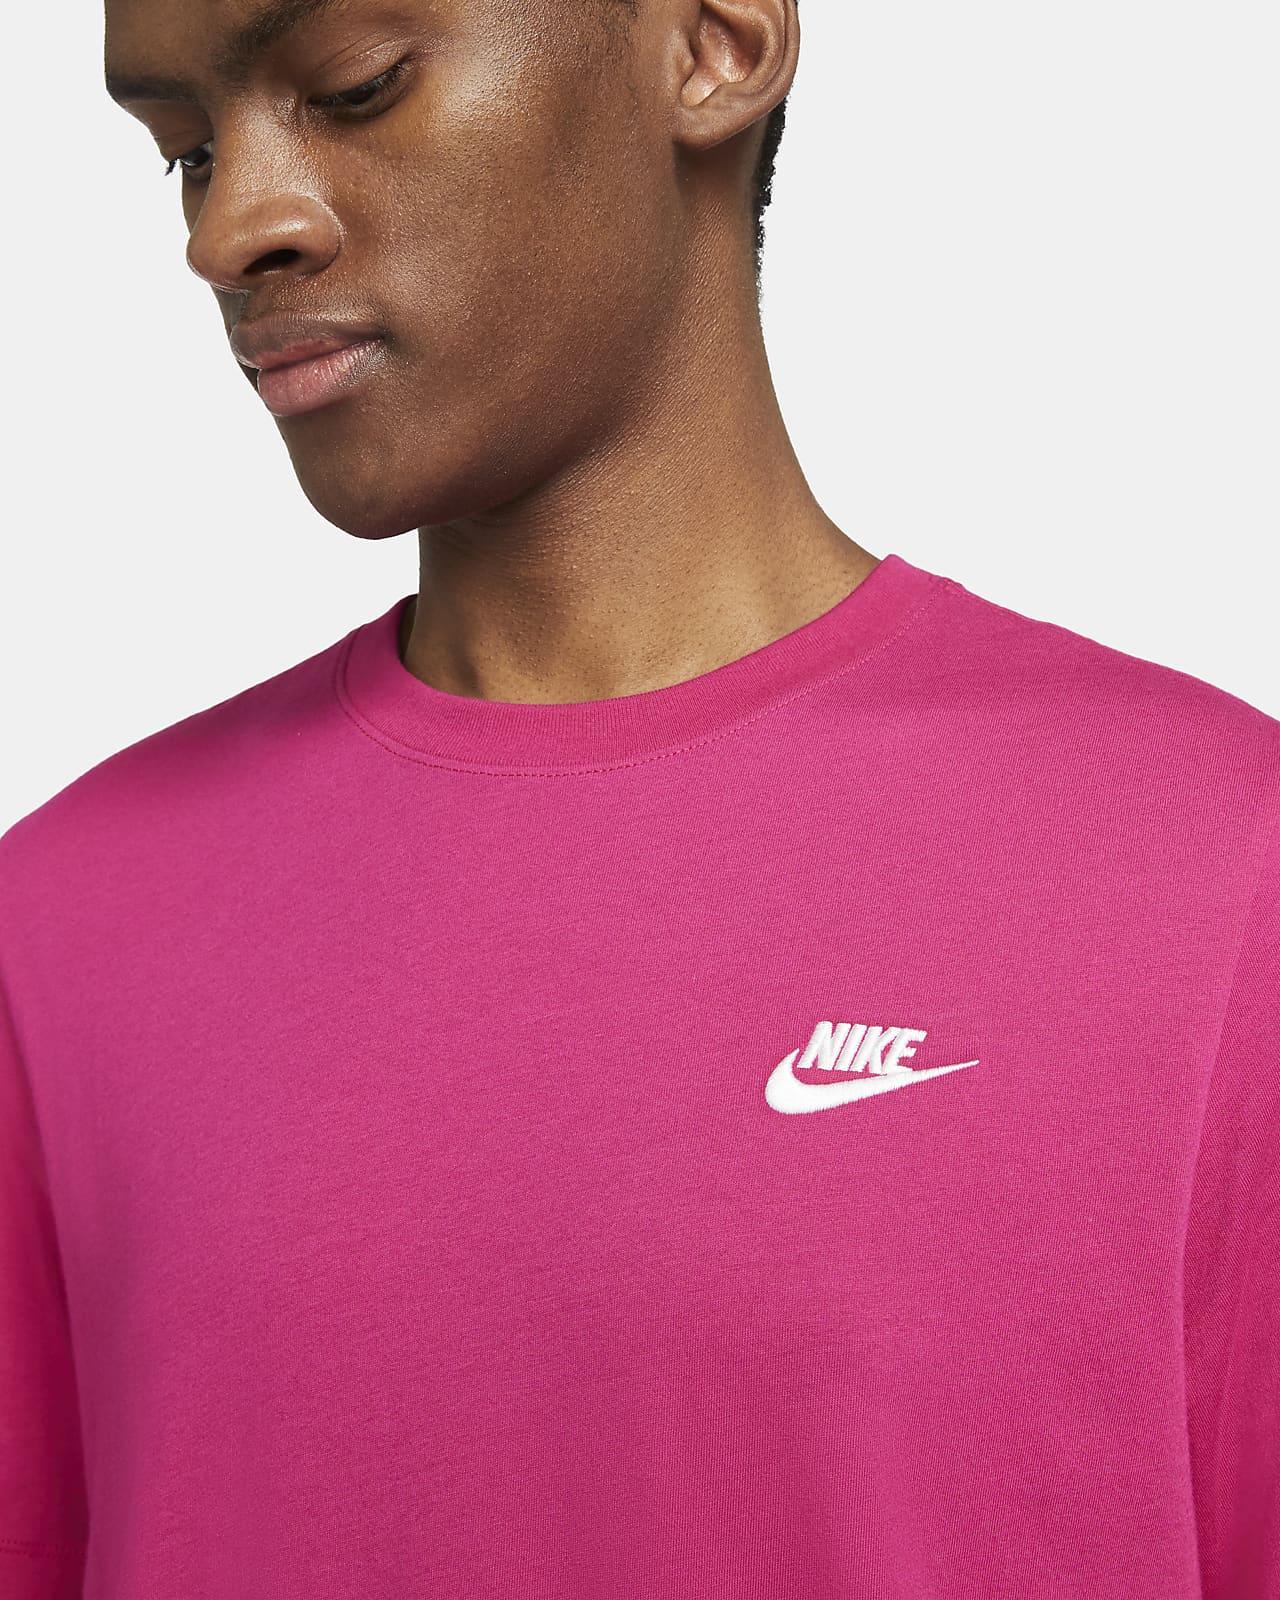 black and pink nike shirt mens